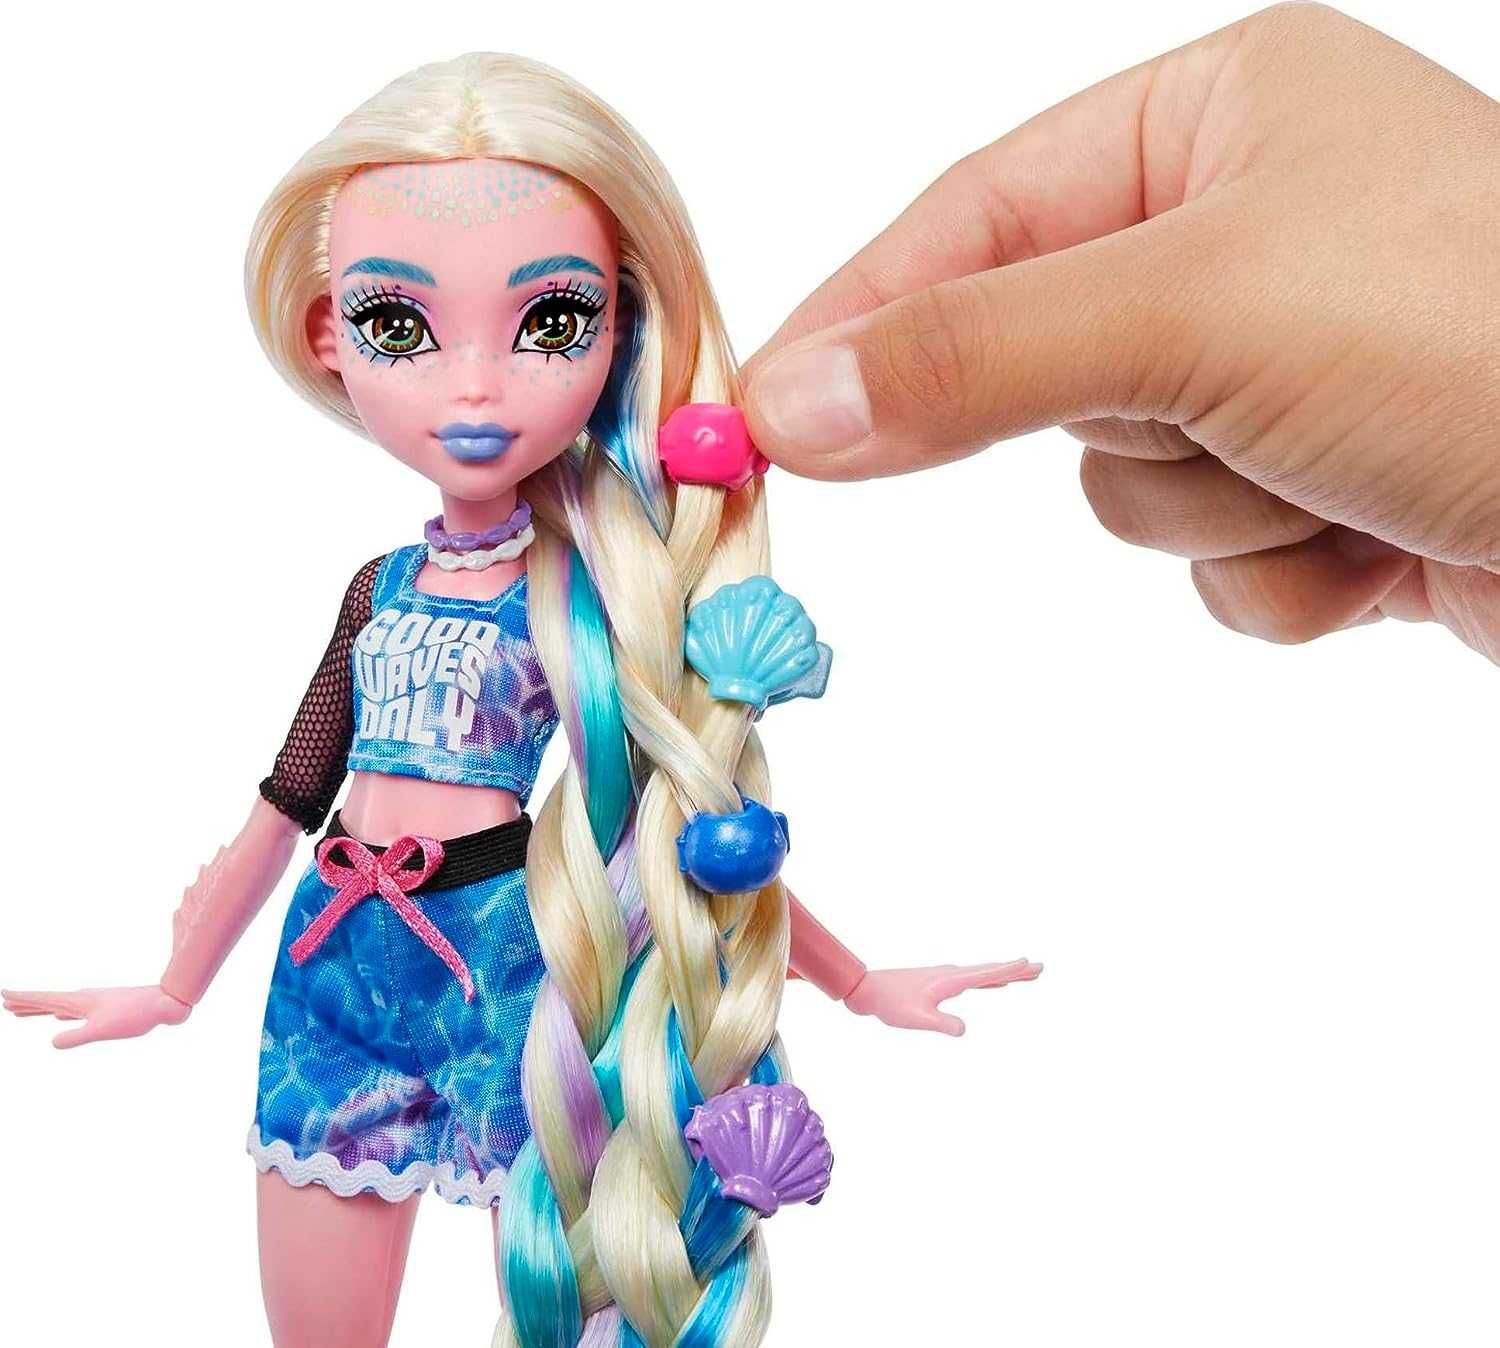 Монстер Хай кукла Лагуна Спа день  Monster High Lagoona Spa Day Mattel